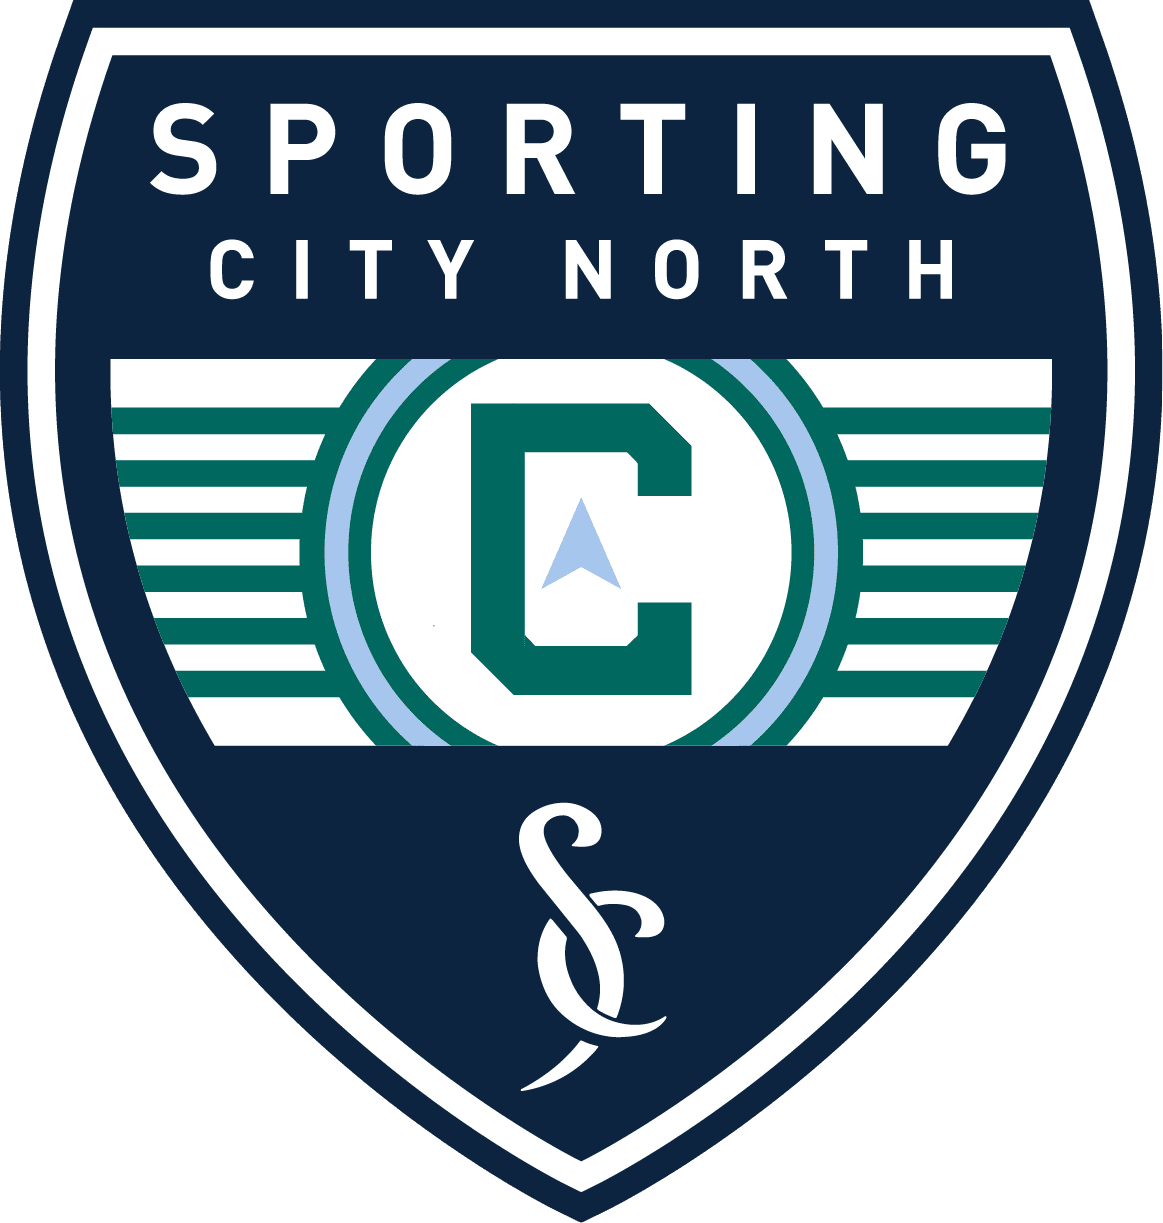 Sporting City North